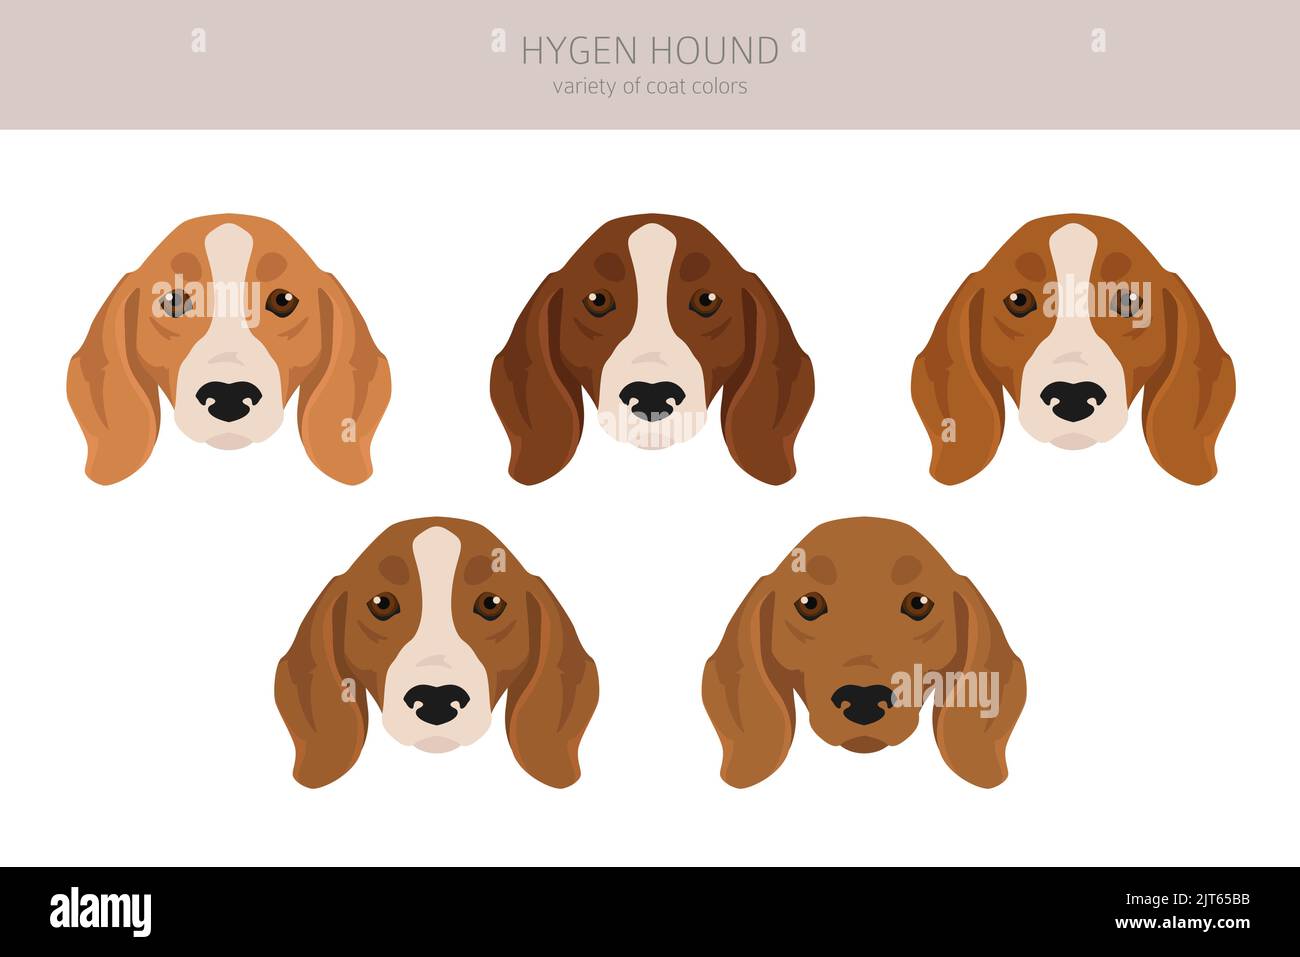 Hygen hound clipart. Different poses, coat colors set.  Vector illustration Stock Vector